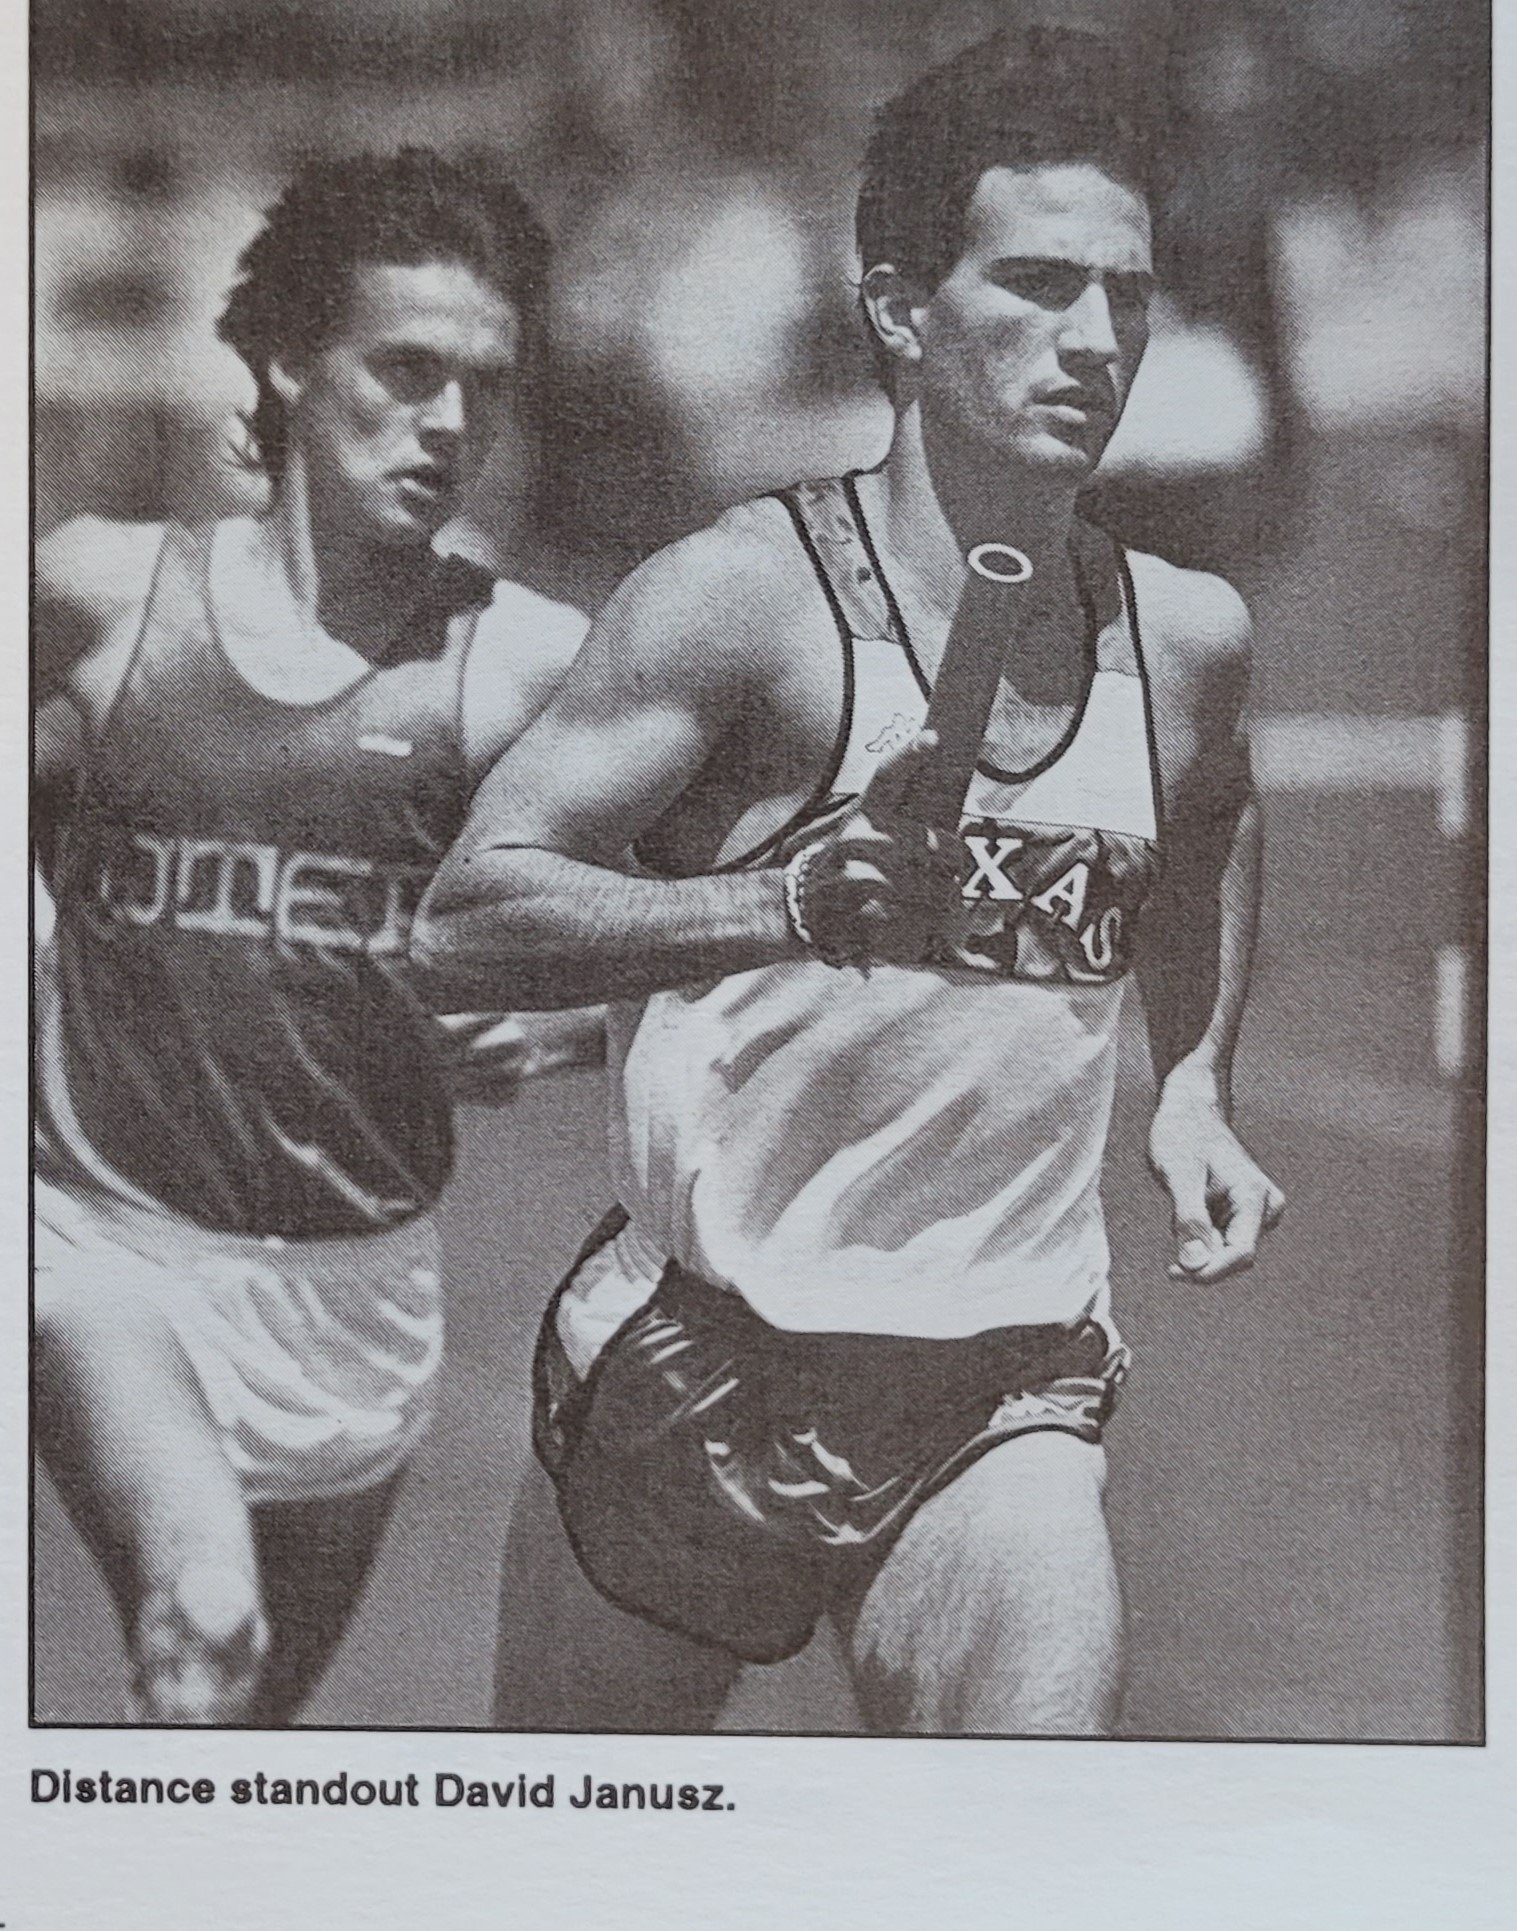 1991 men's track  David Janusz.jpg